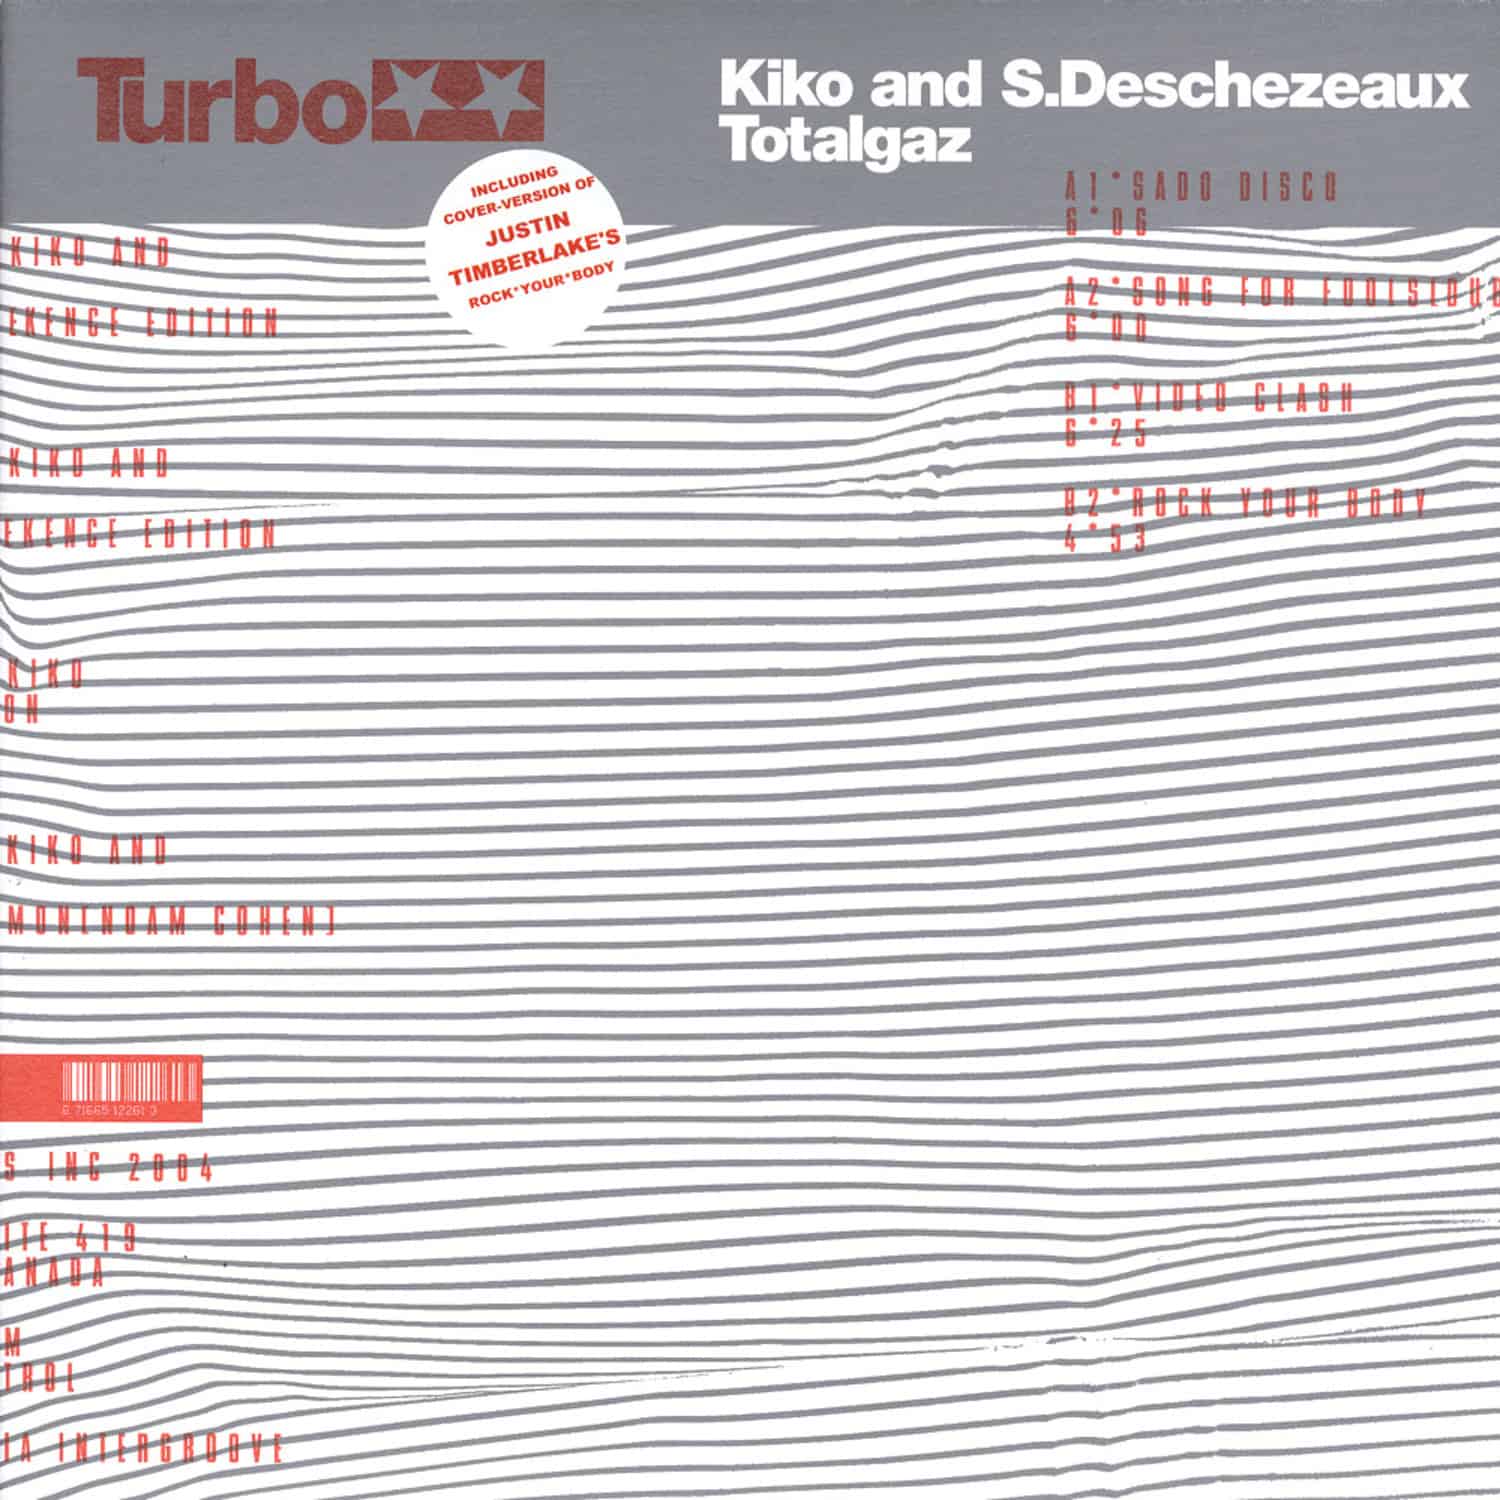 Kiko and S. Deschezeaux - TOTAL GAZ EP